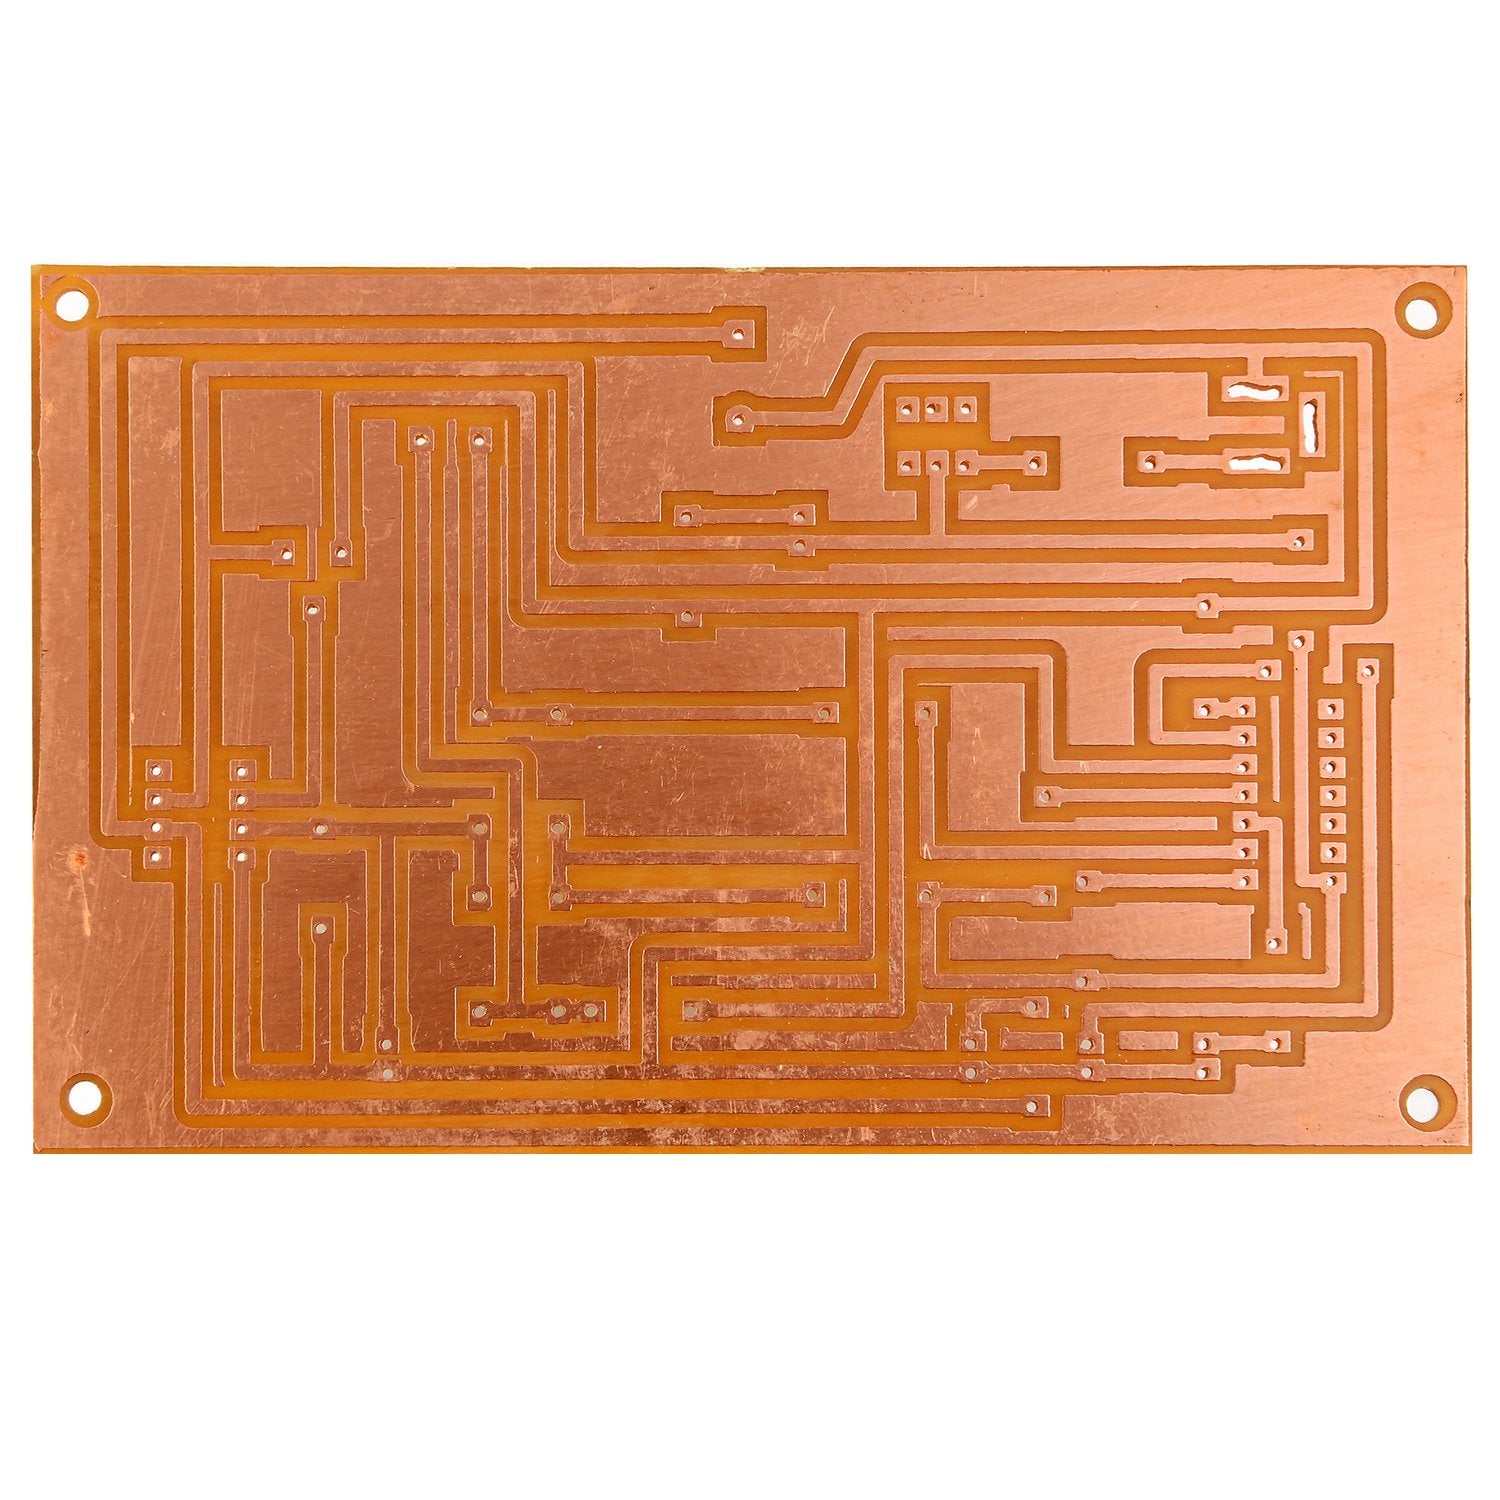 over-speed-detector-using-arduino